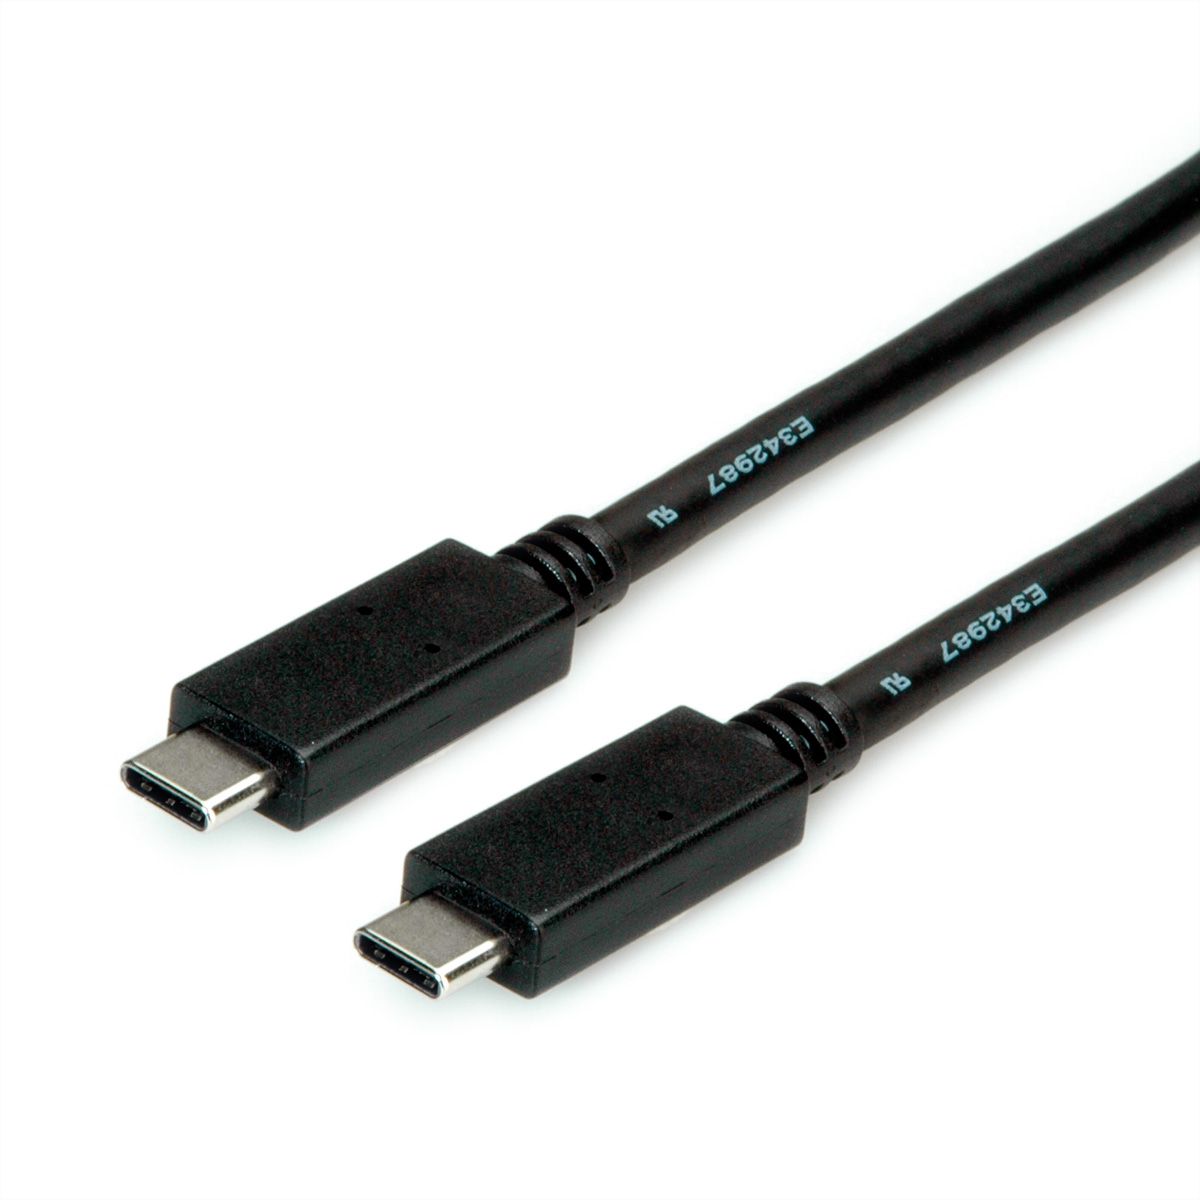 Usb 2.0 usb 3.2 gen1. Кабель USB 3.1 Gen 2. USB 3.2 Gen 1 Type a кабель. USB C 3.2 gen2. Кабель USB 3.2 Gen 2 Type-c.